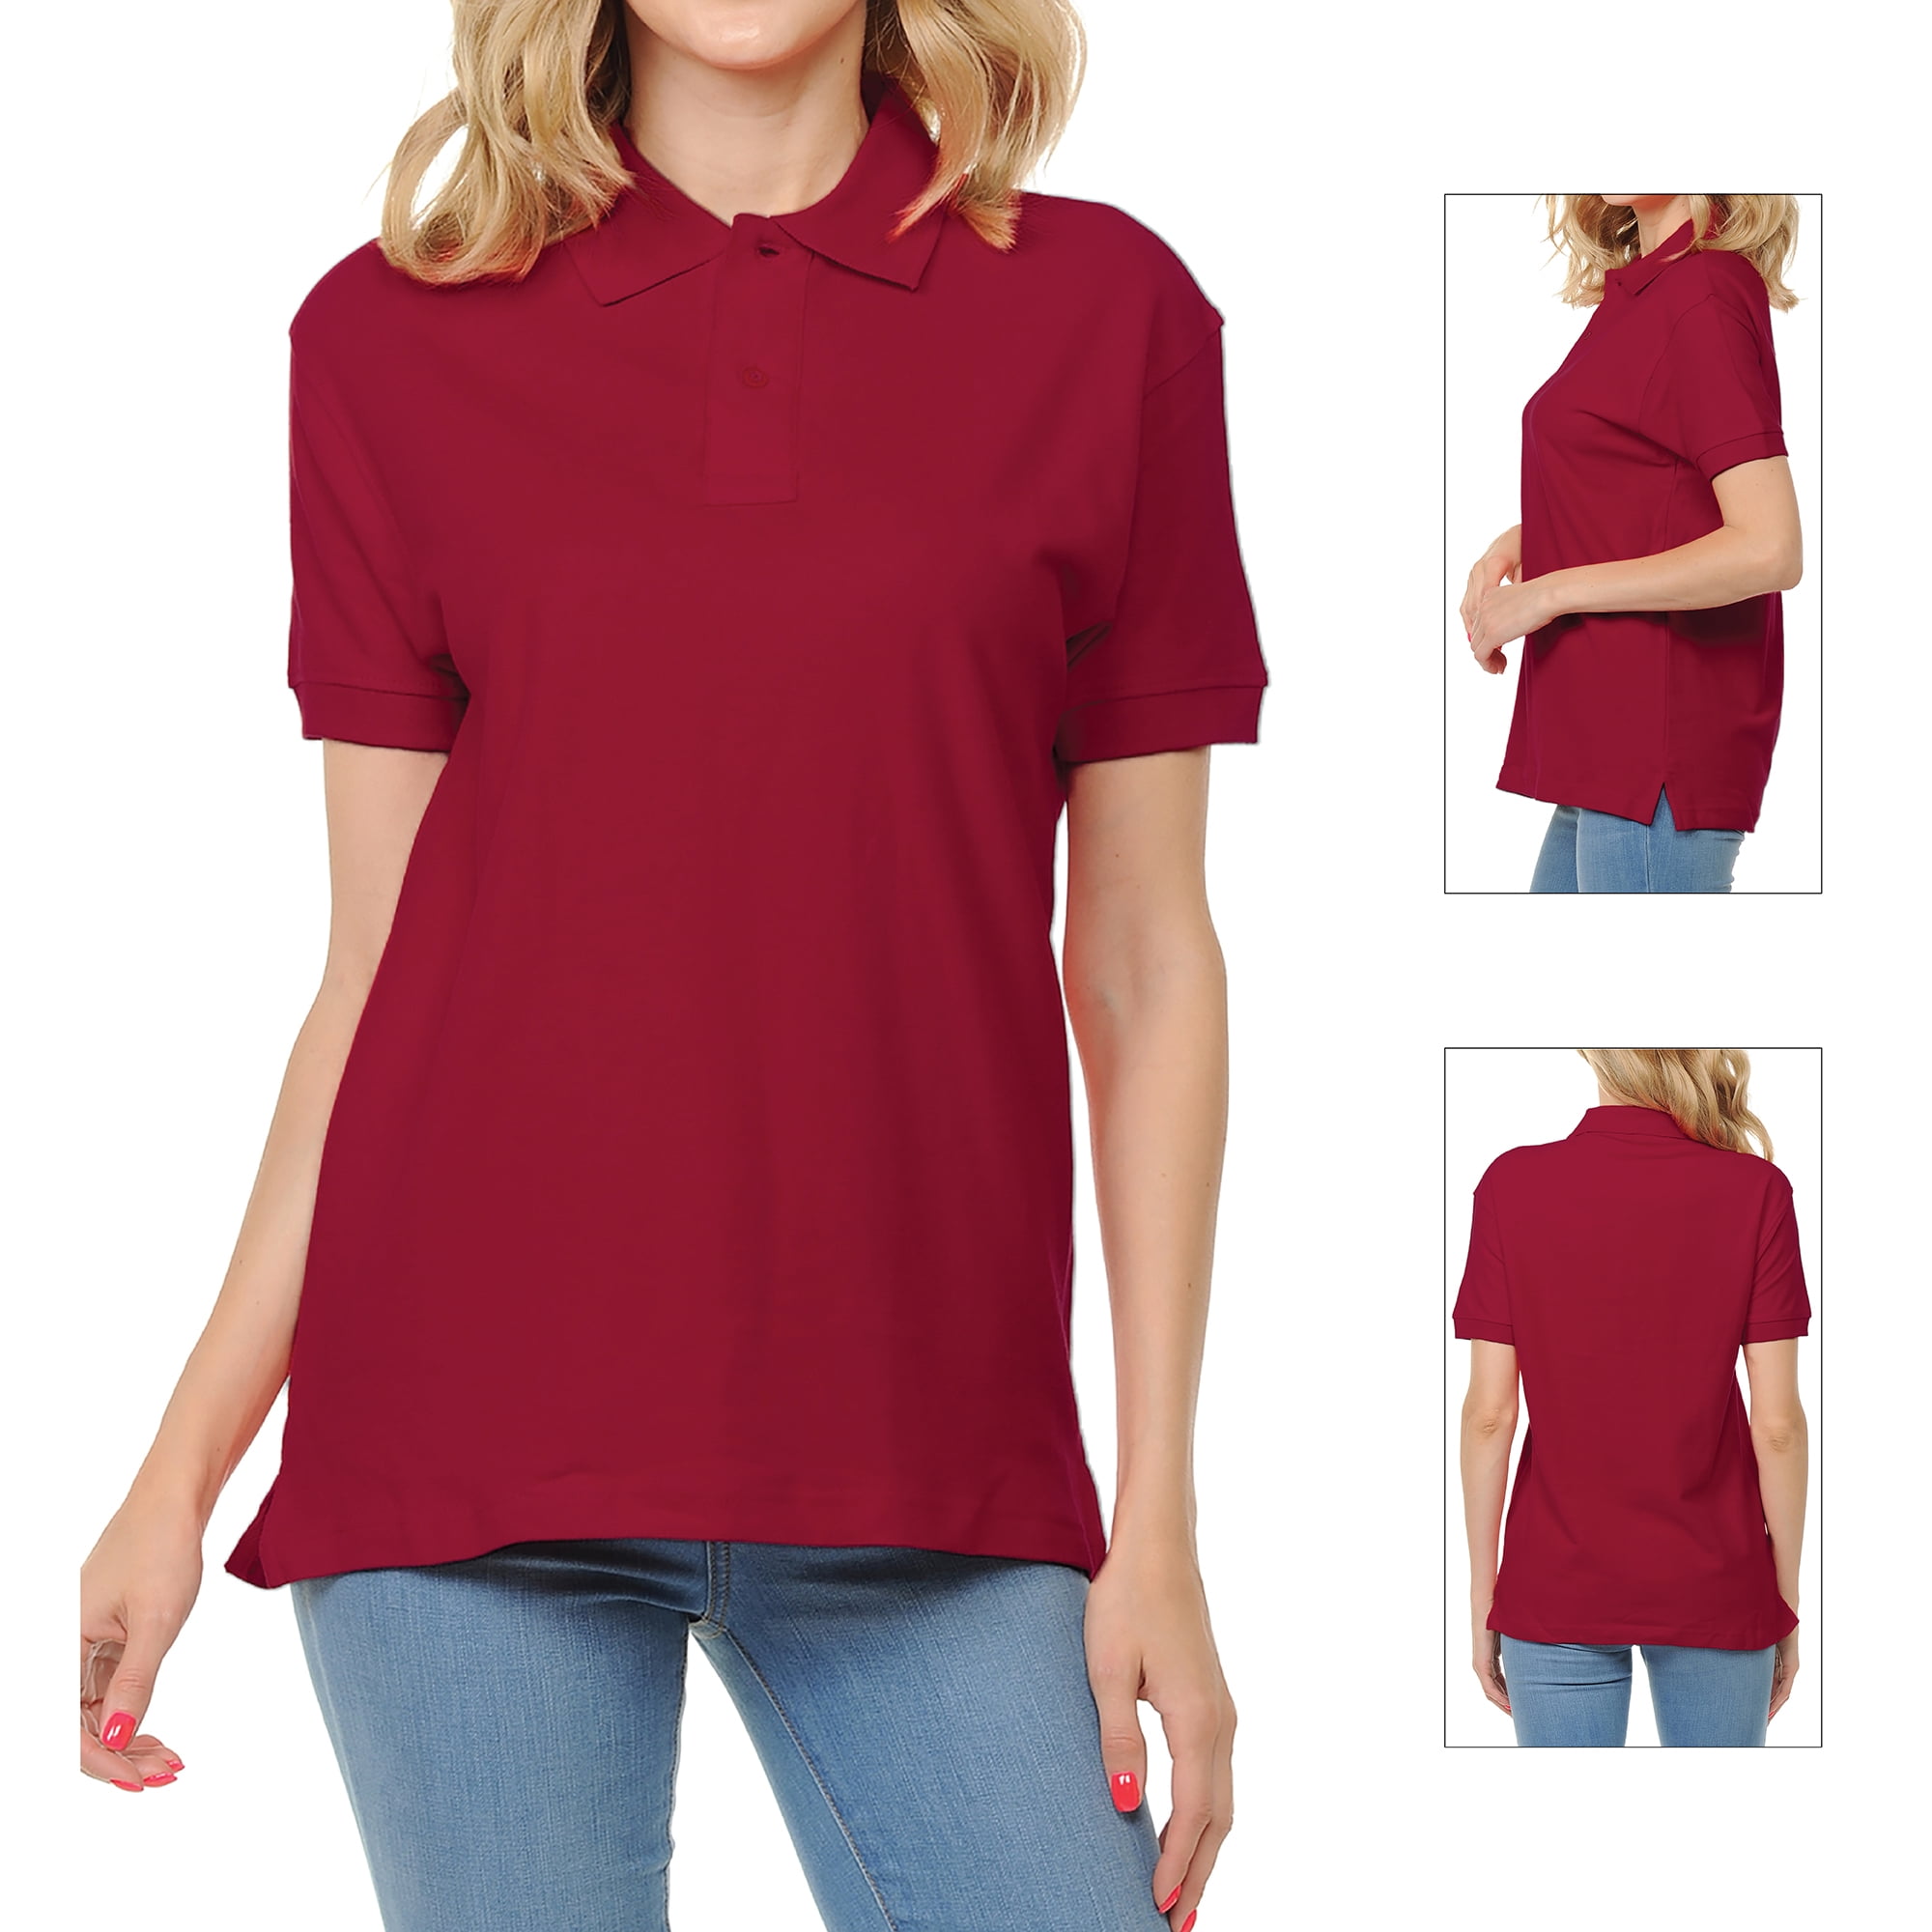 maroon polo shirt for women